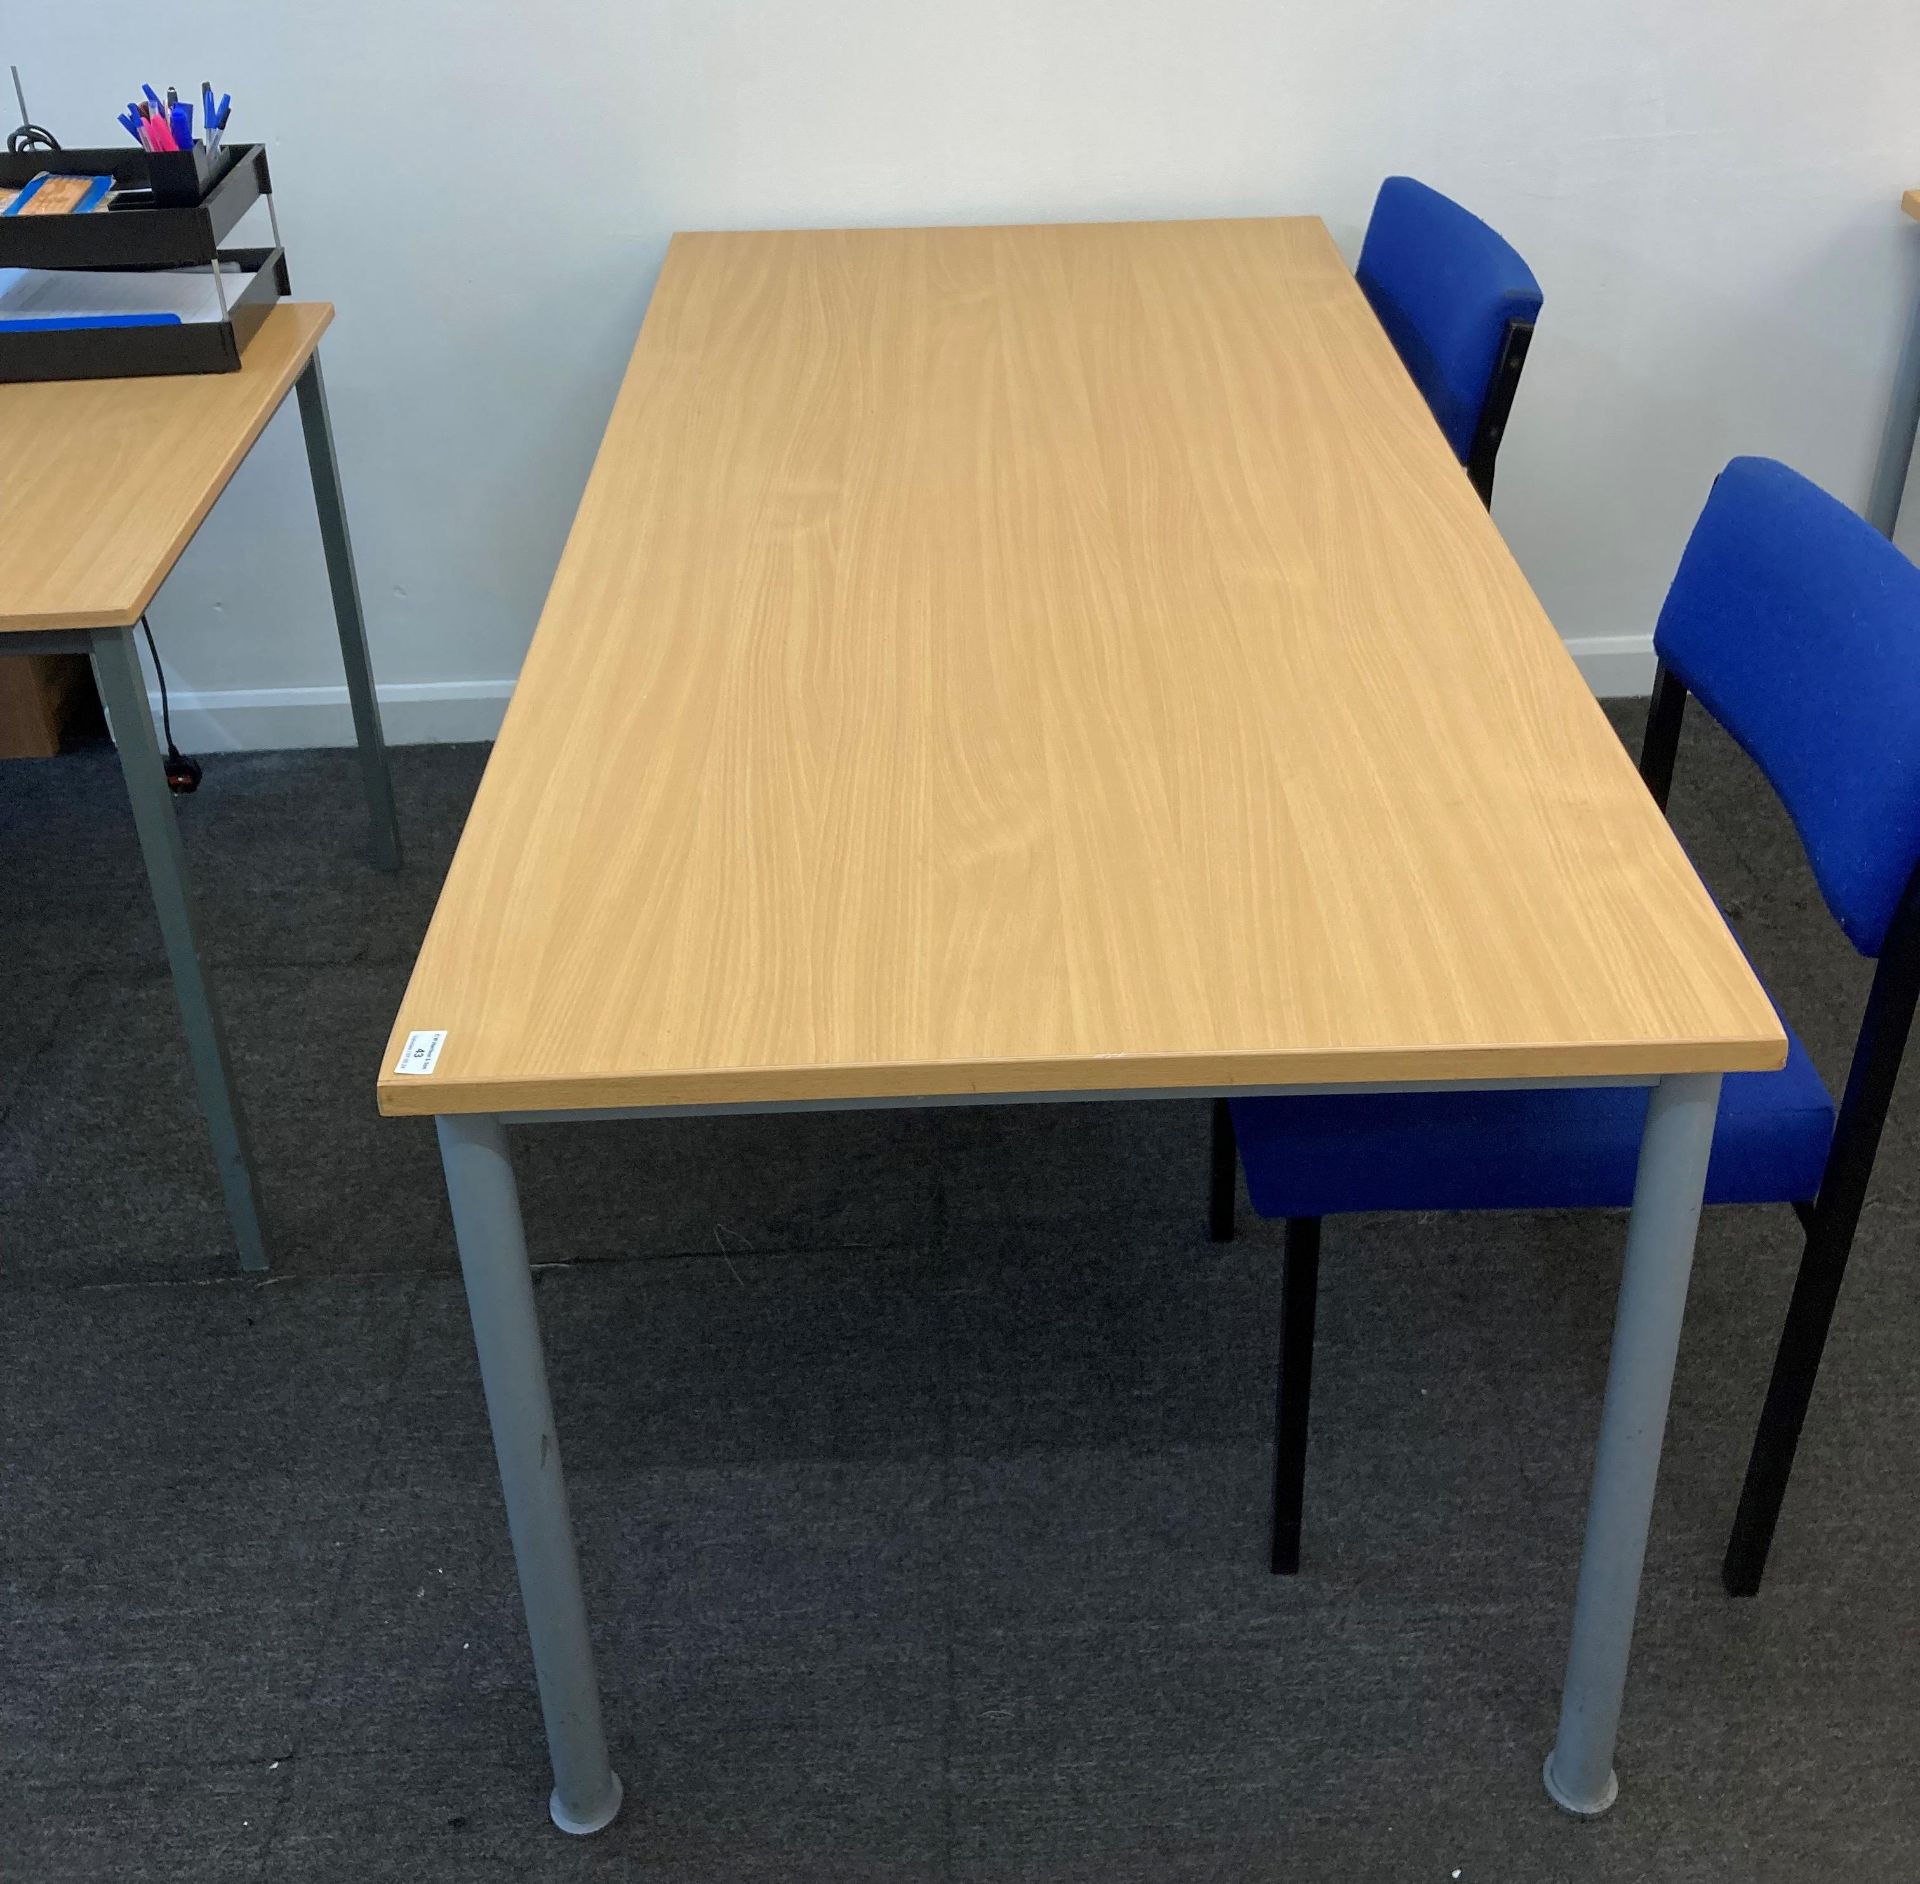 Contents to teaching room - three beech desks (160cm x 80cm), four beech desks (120cm x 80cm), - Image 2 of 6